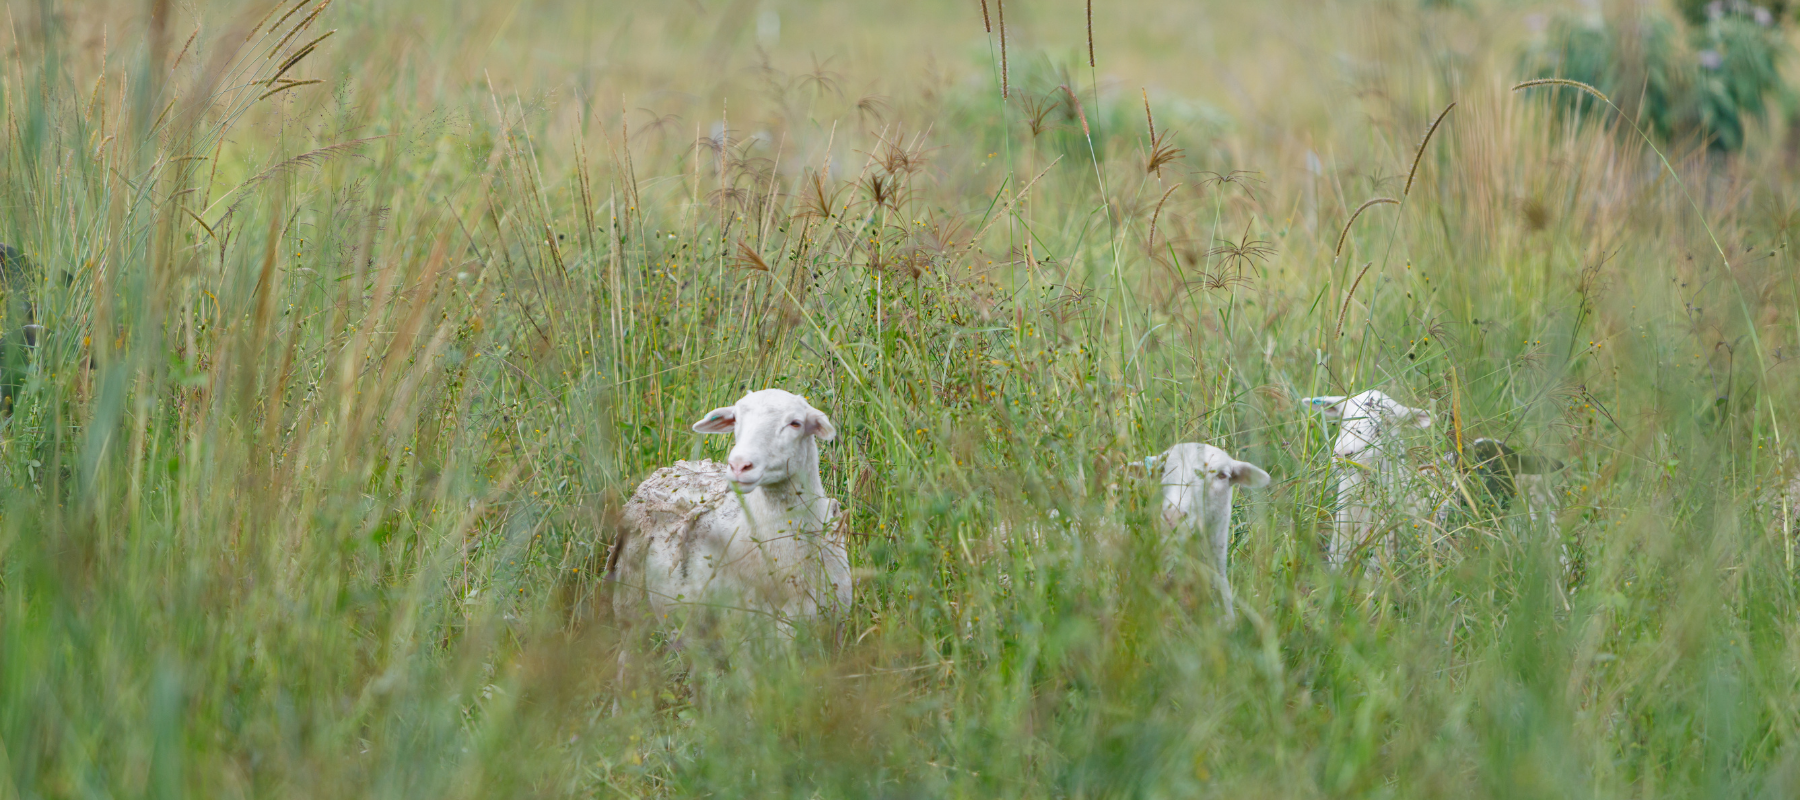 Sheep in the paddock